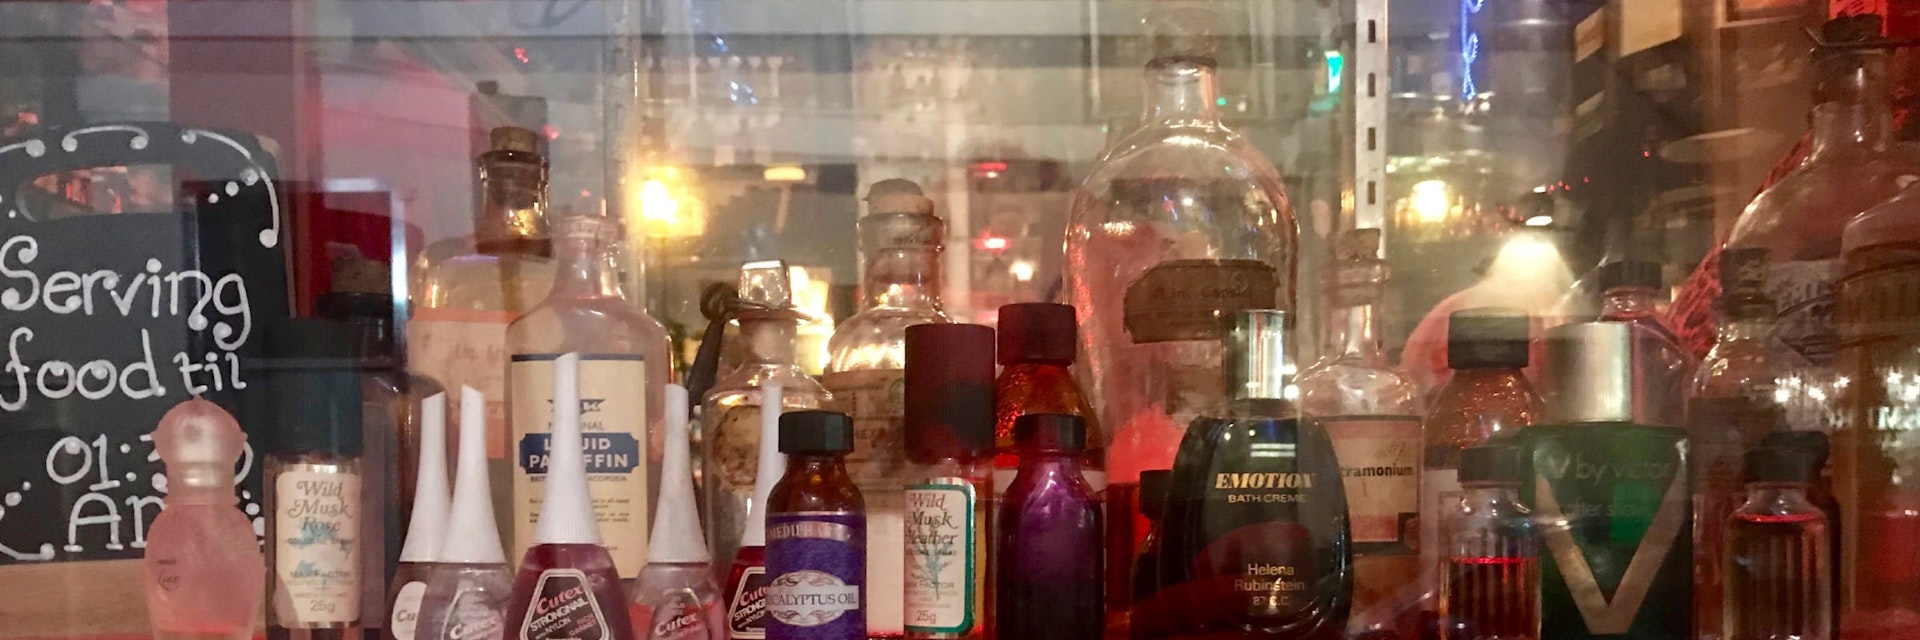 The vintage cosmetic display at Arthur Mayne